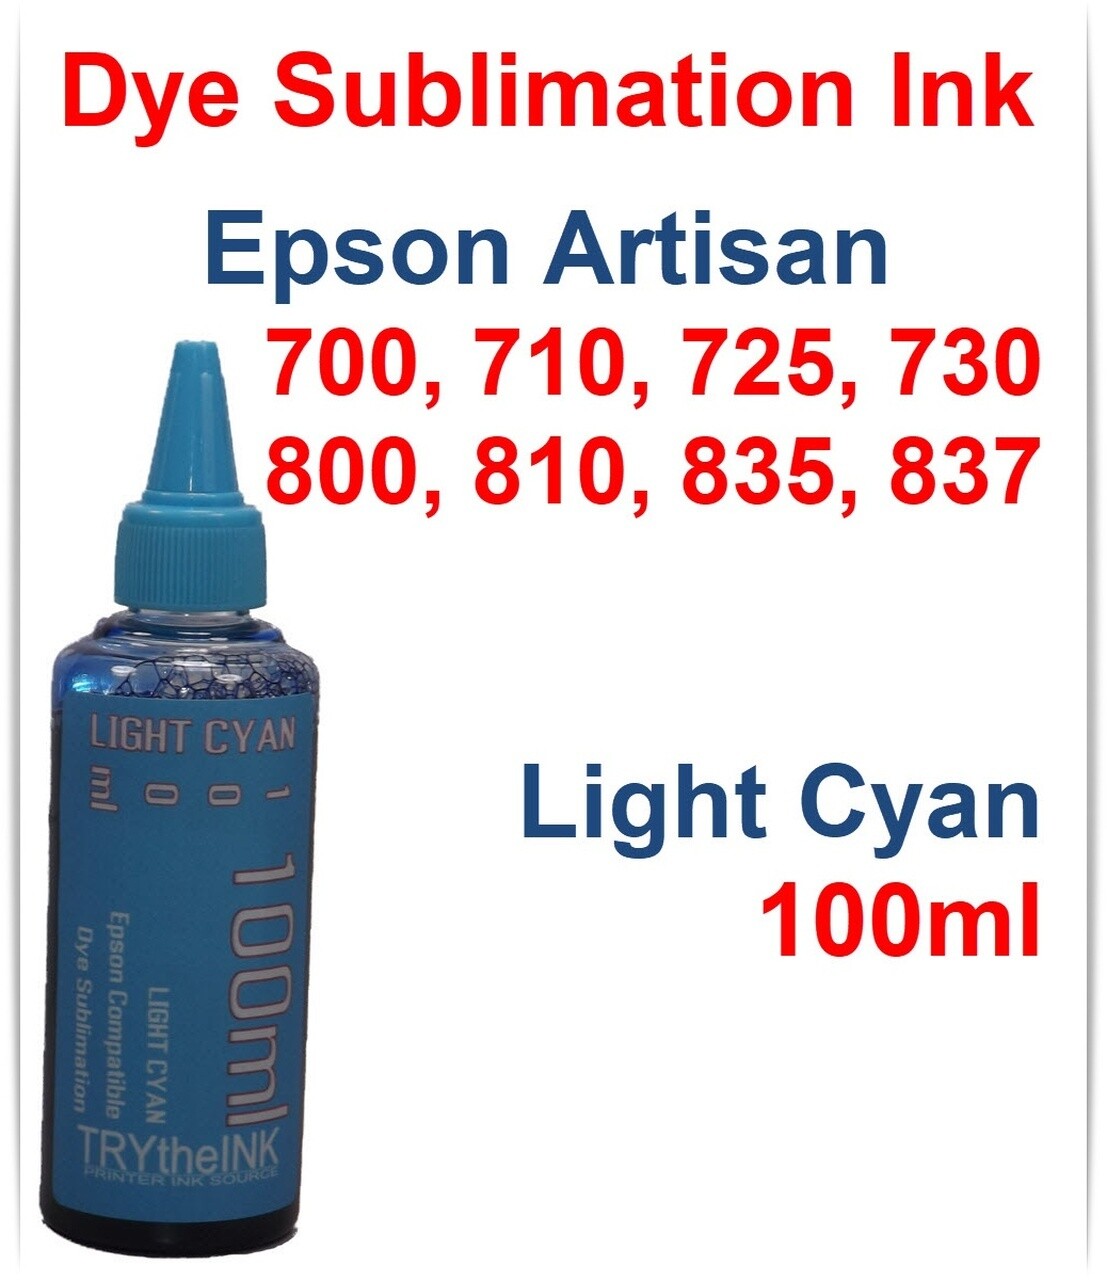 Light Cyan Dye Sublimation Ink 100ml for Epson Artisan 700 710 725 730 800 810 835 837